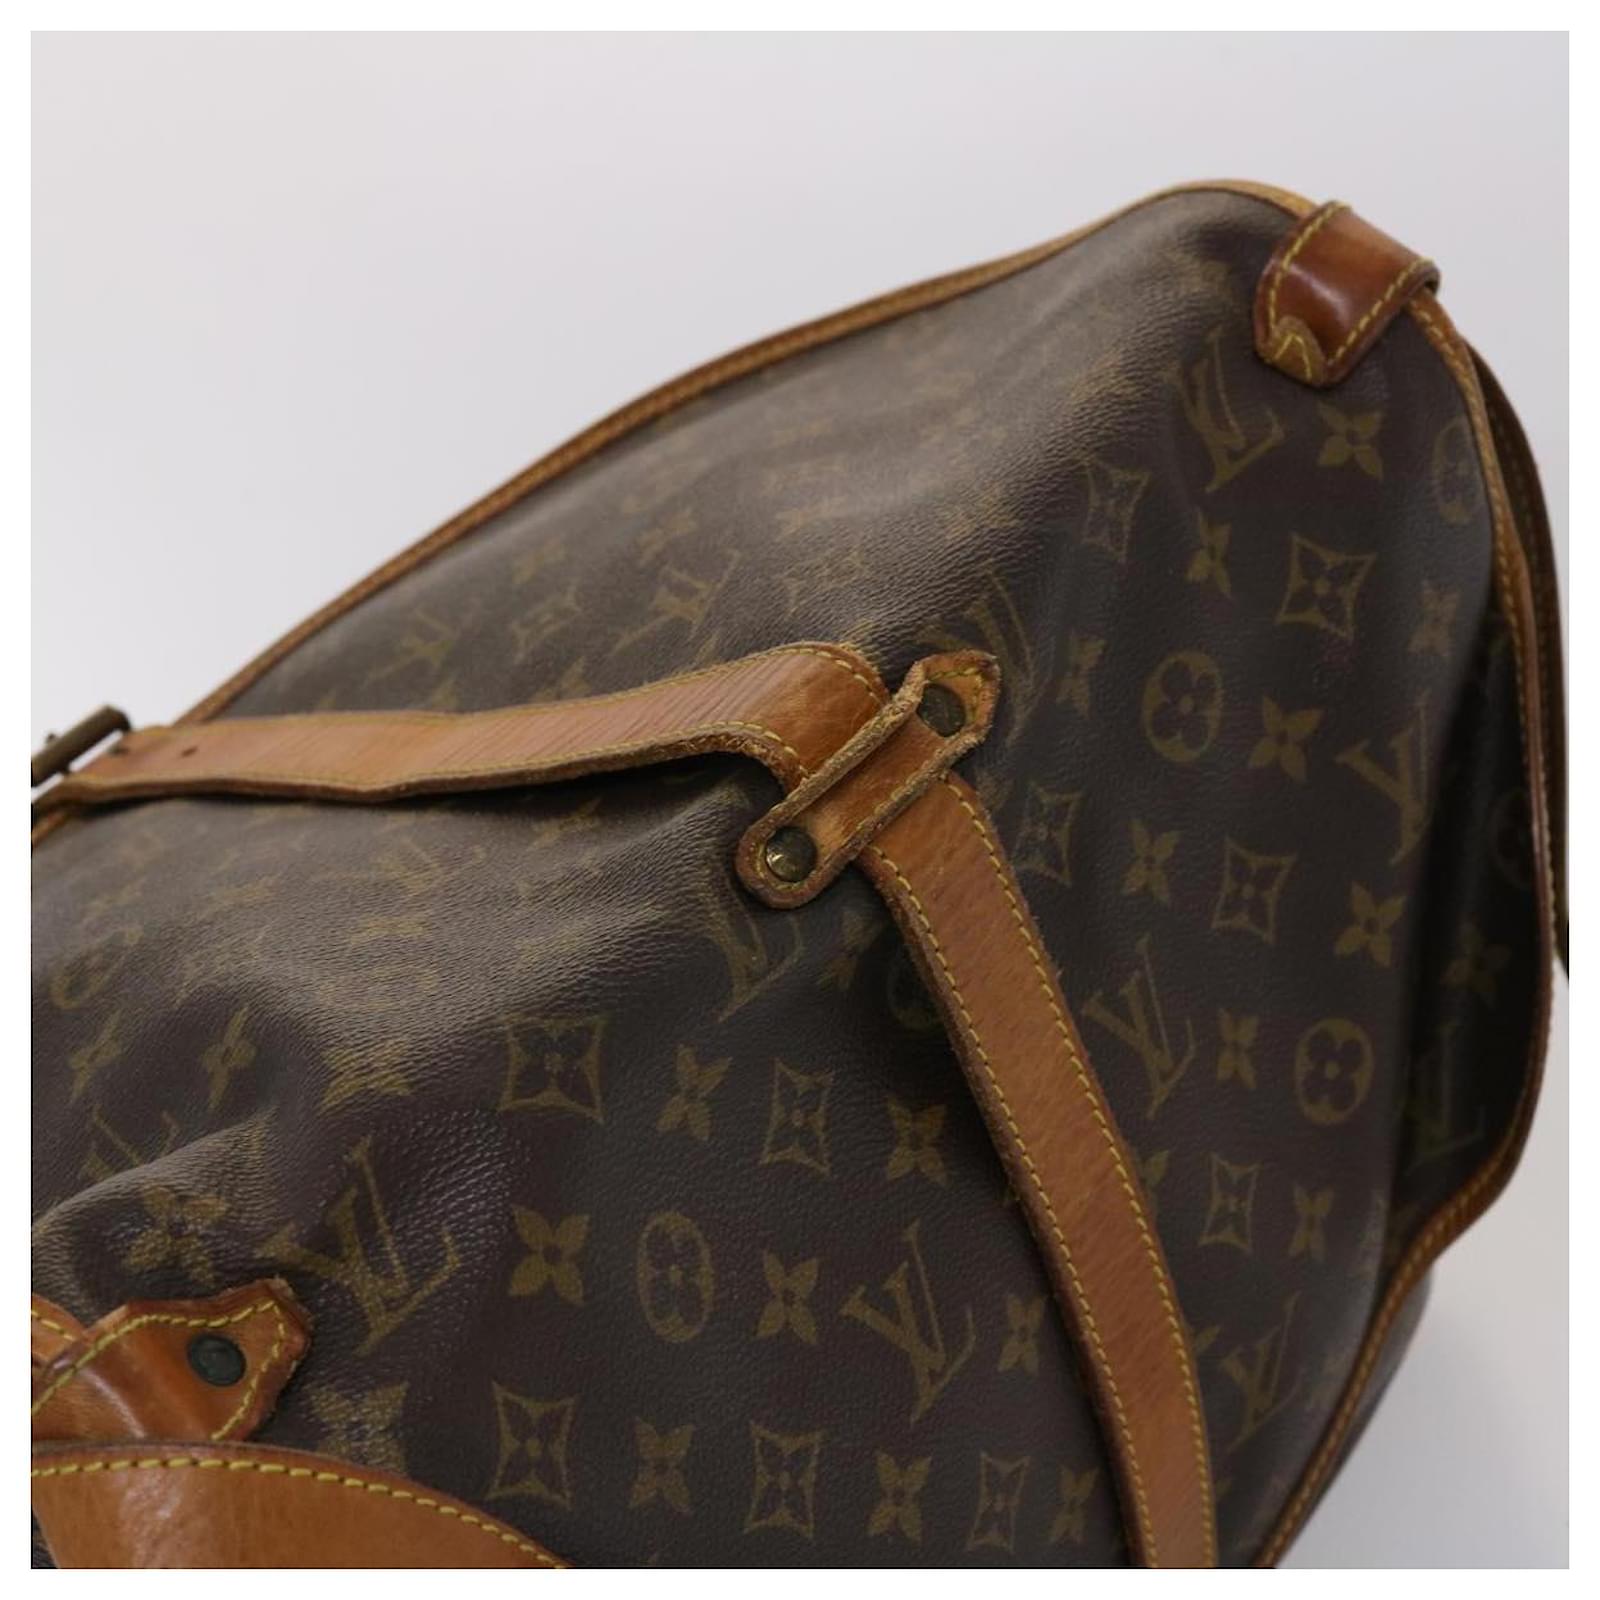 History of the bag: Louis Vuitton Saumur